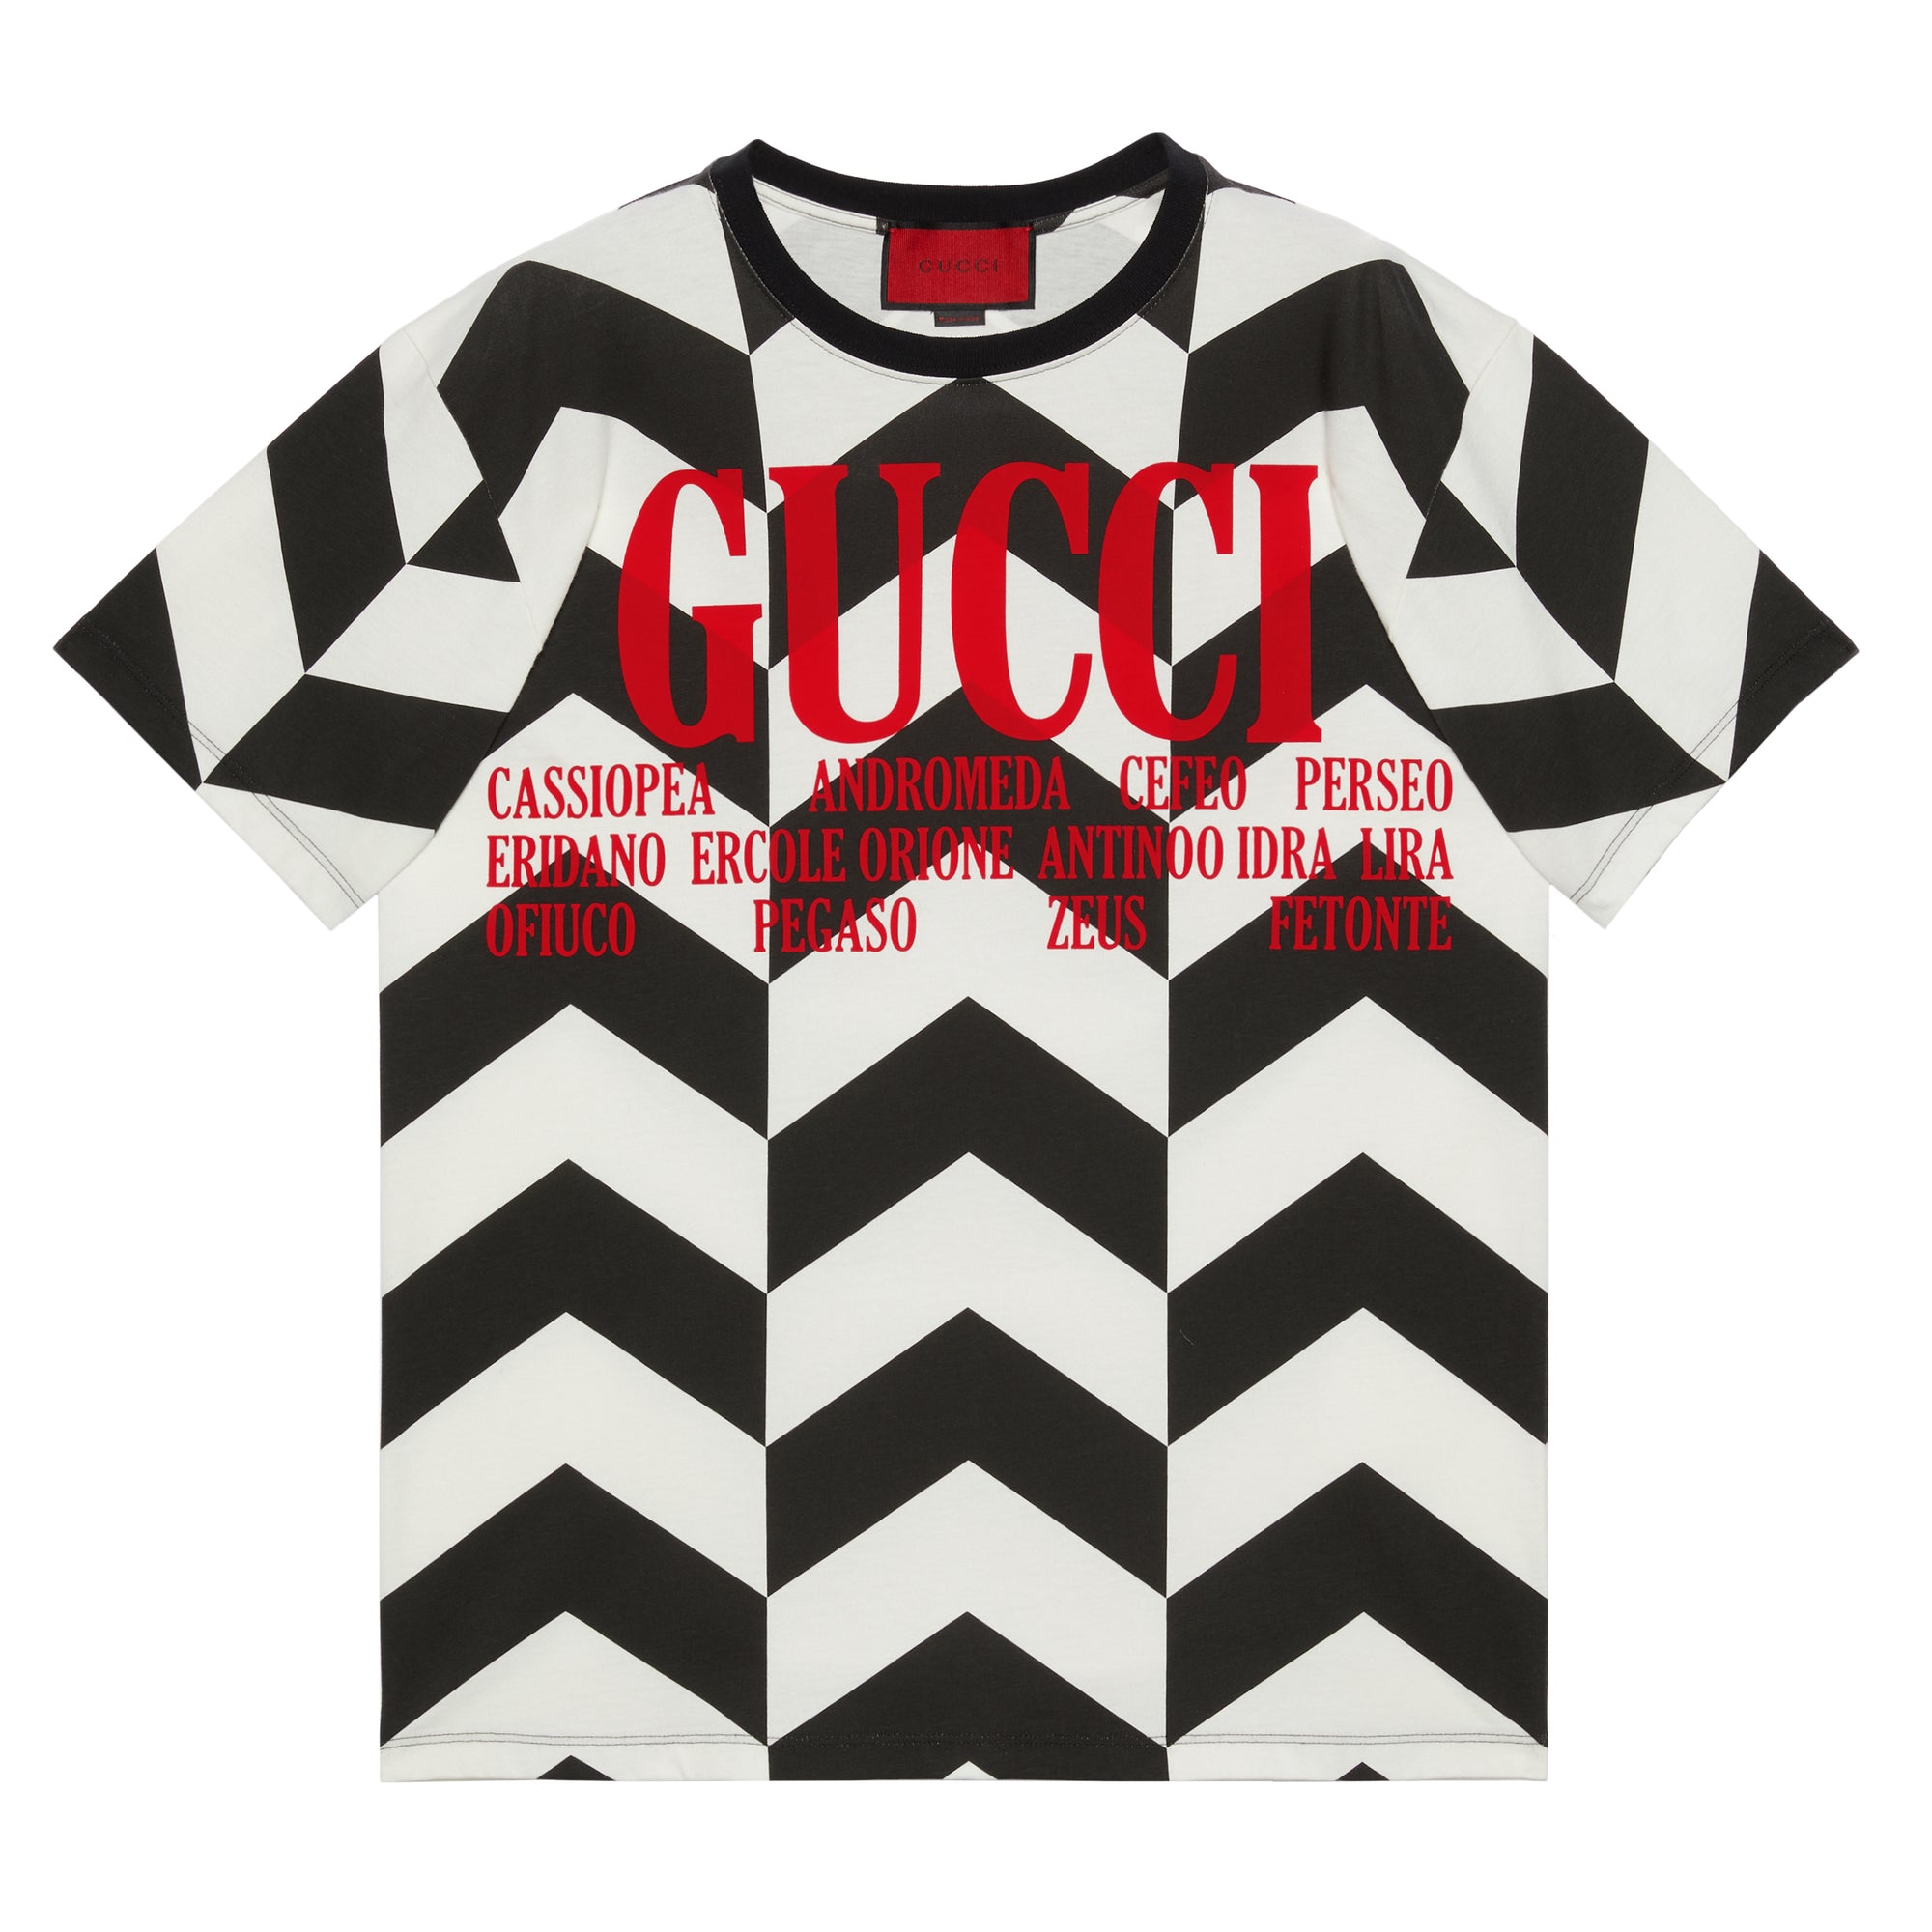 Gucci - Men’s DSM Exclusive Chevron Printed T-Shirt - (Black/White) view 1